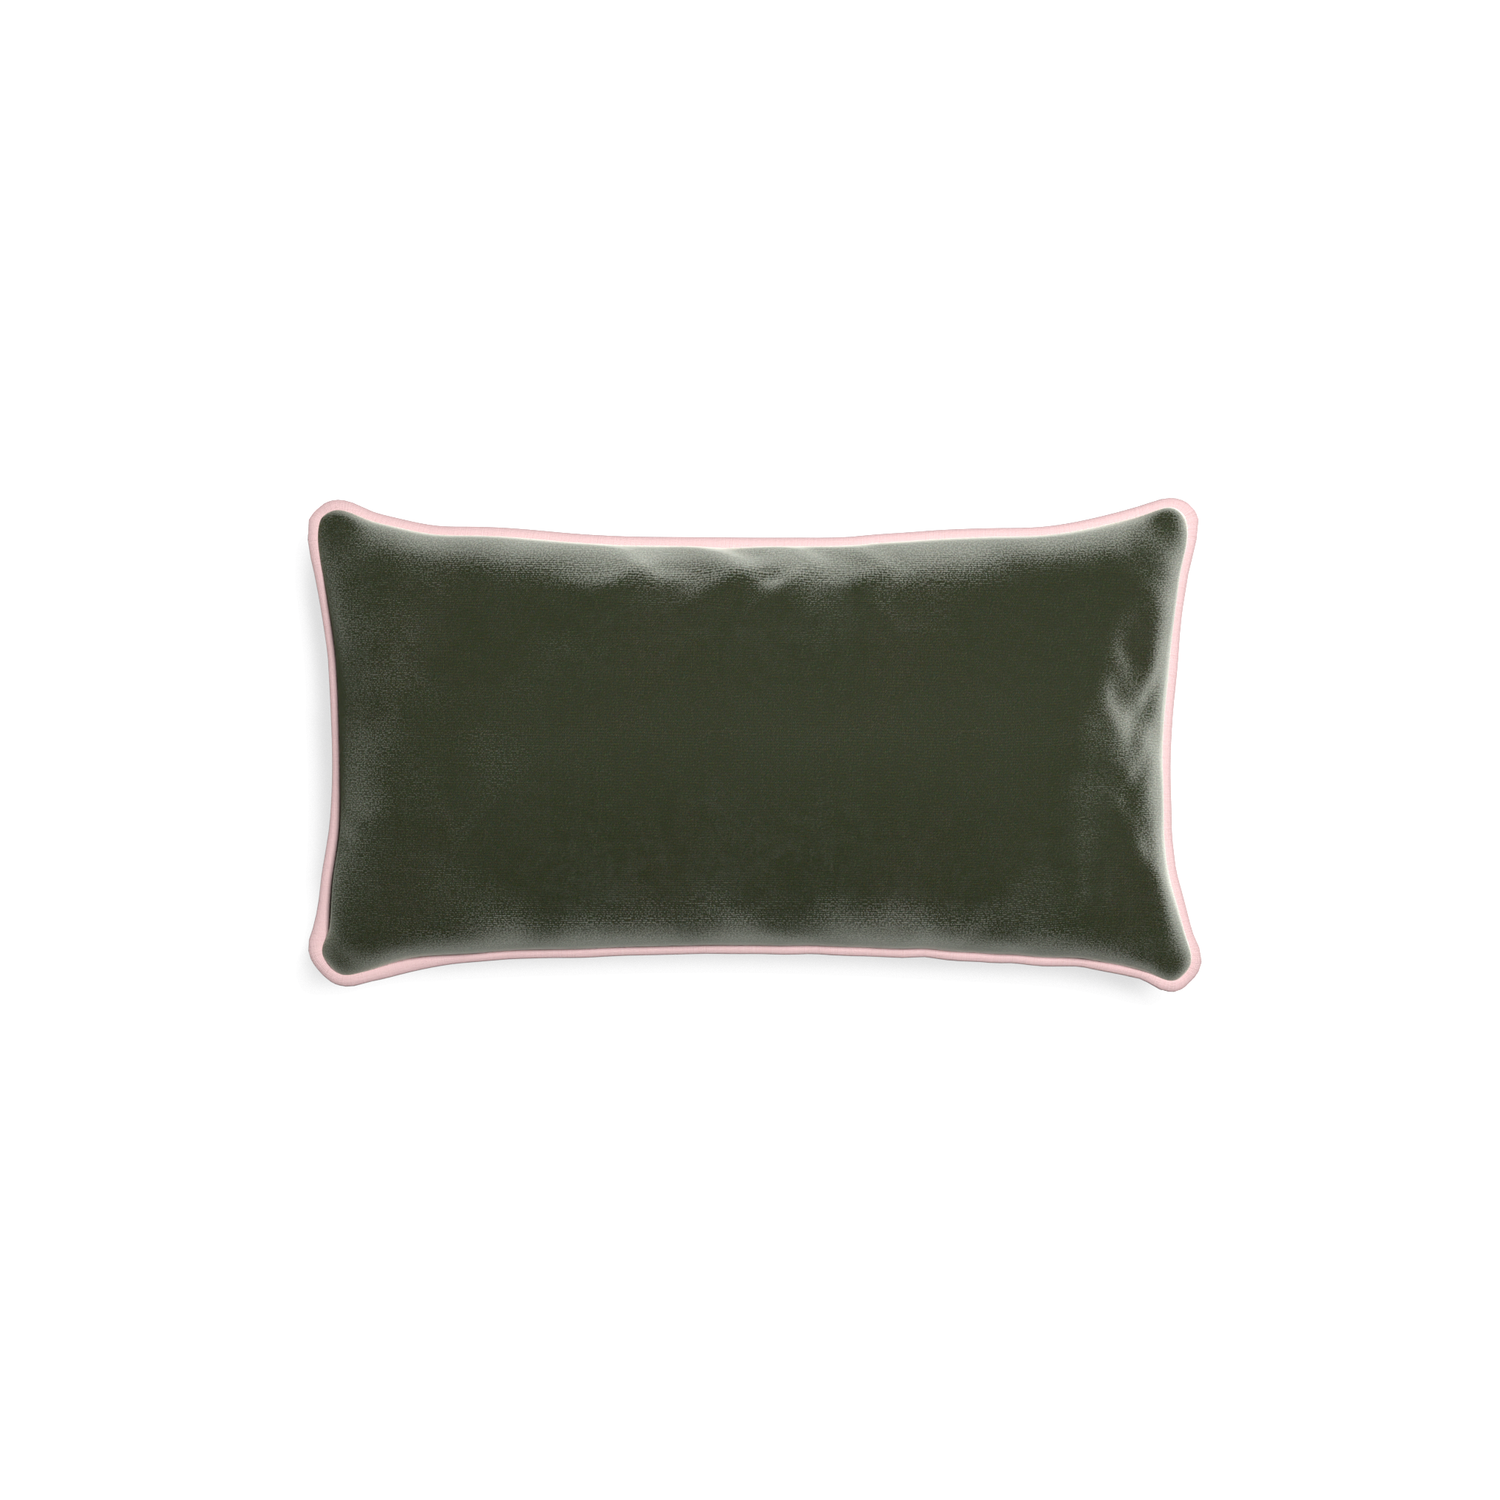 rectangle fern green velvet pillow with light pink piping